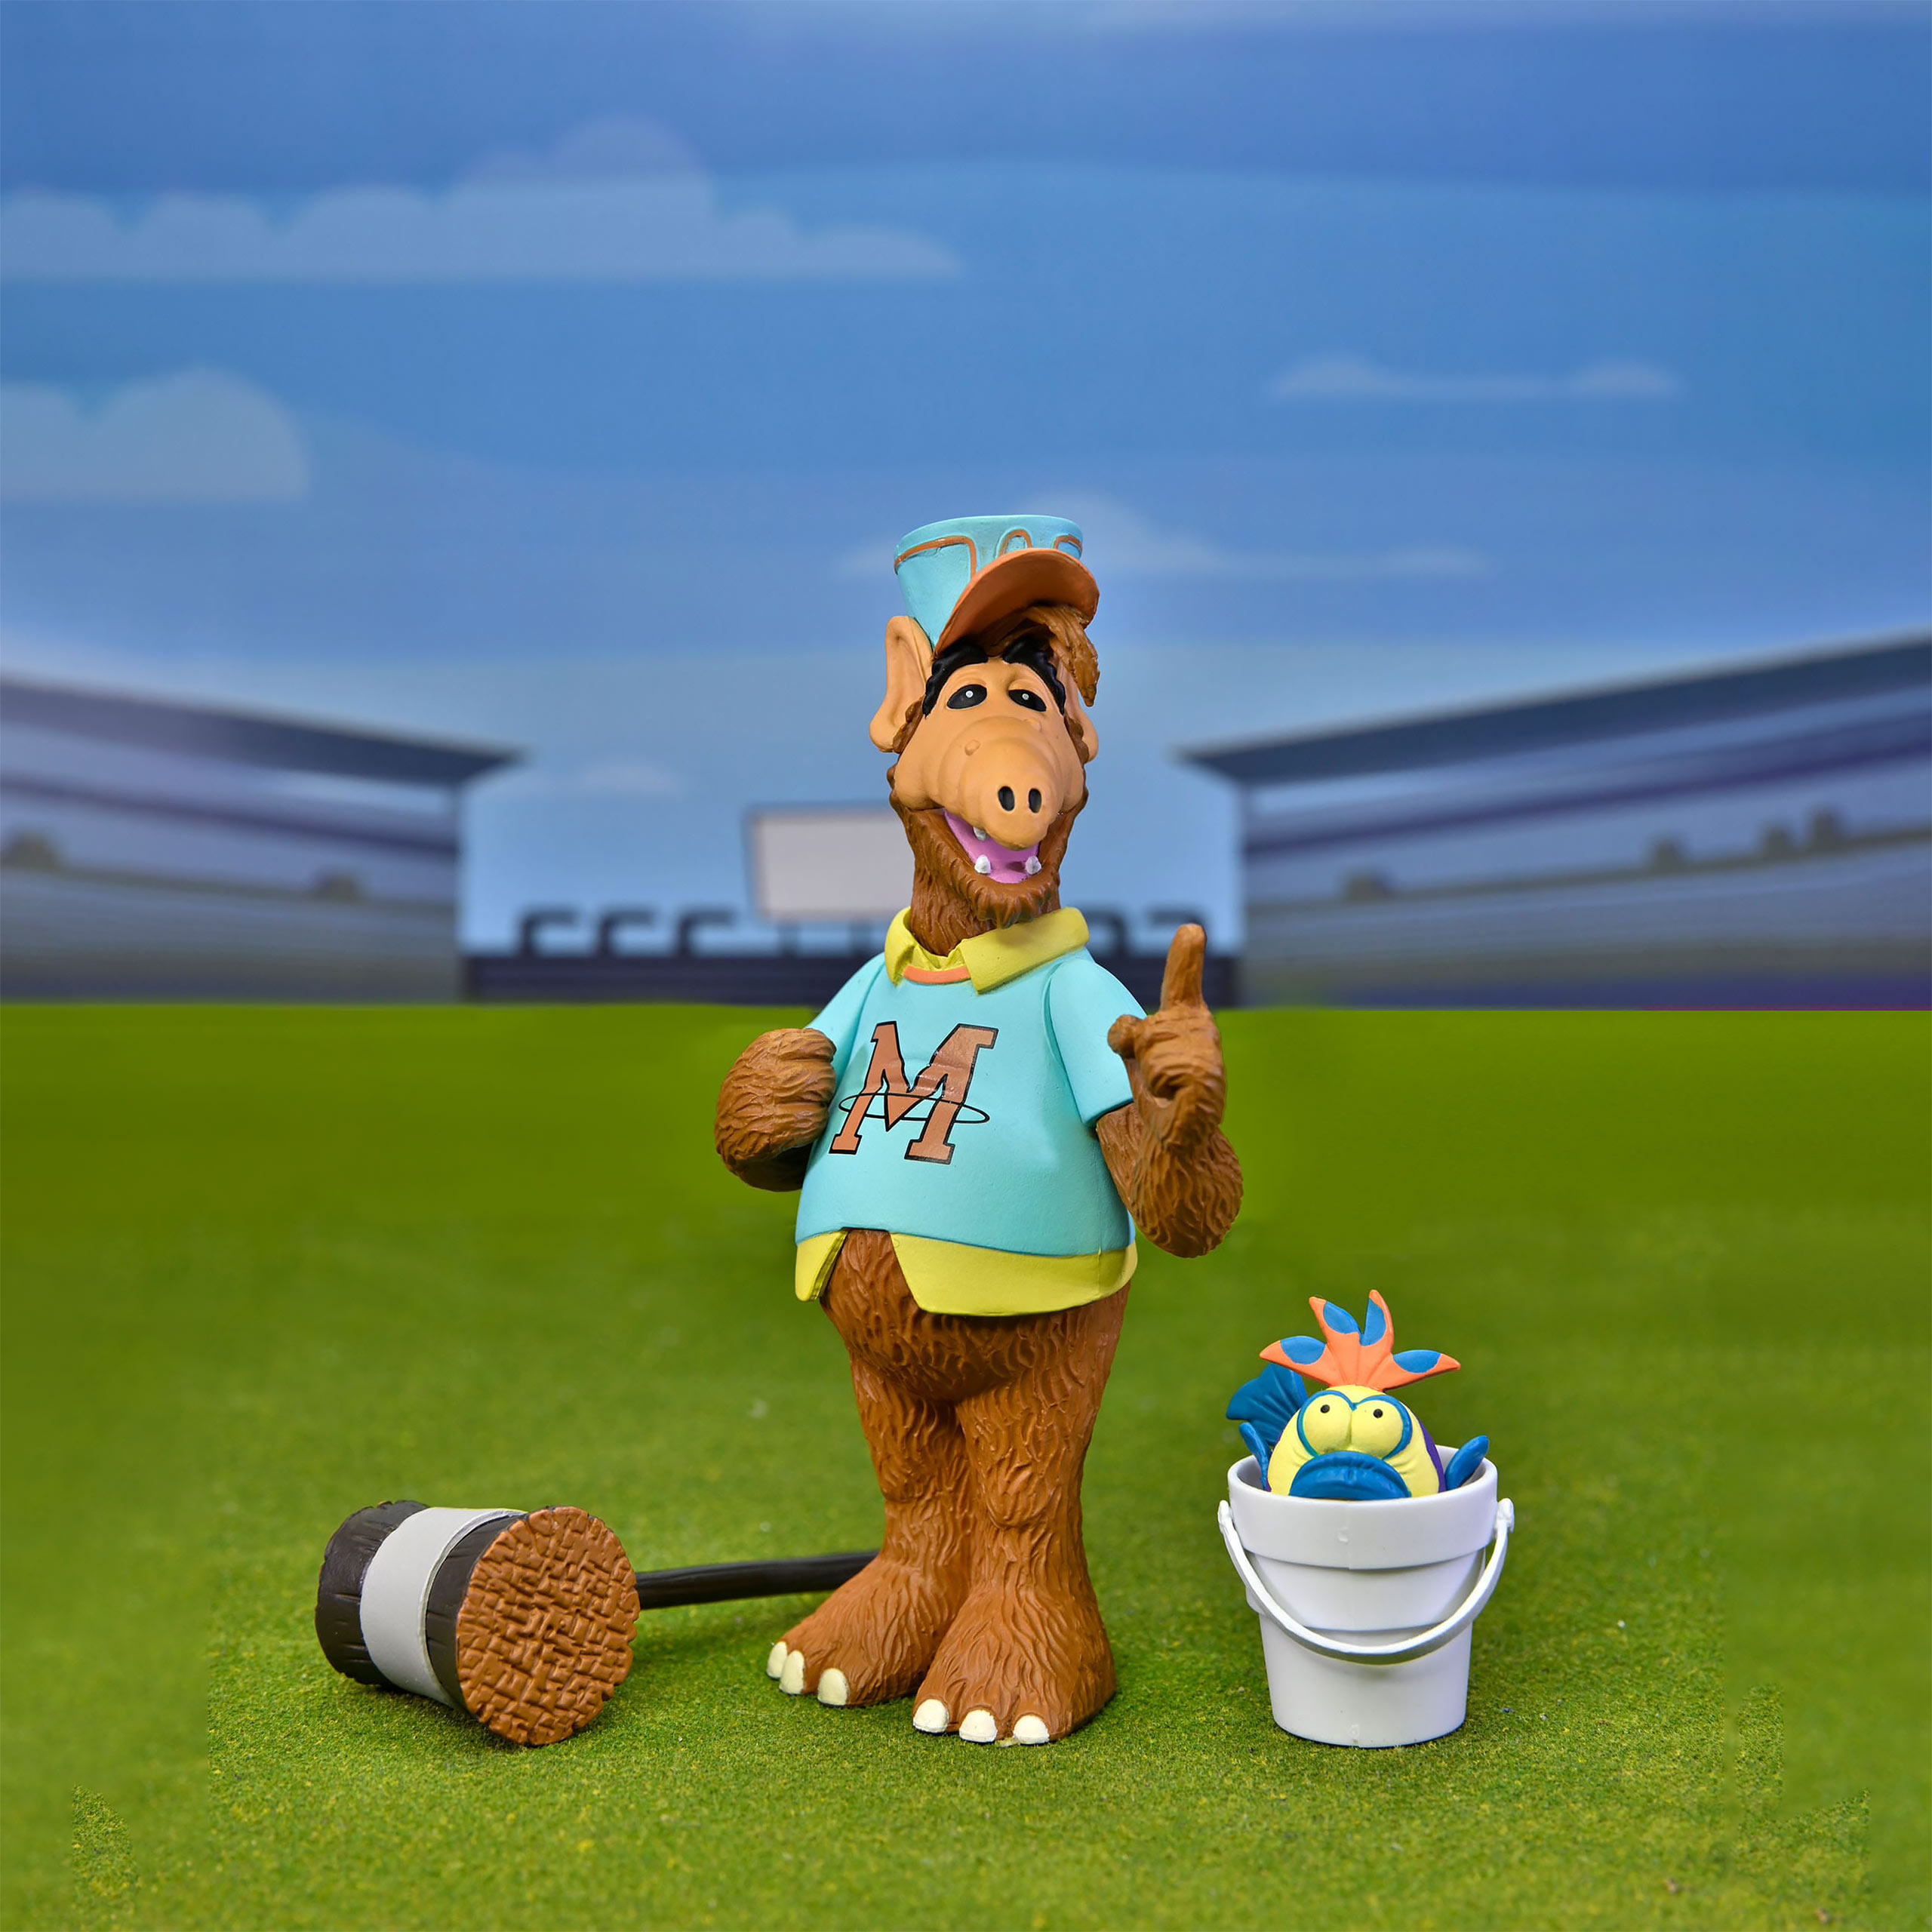 Figurine d'Alf avec une batte de baseball